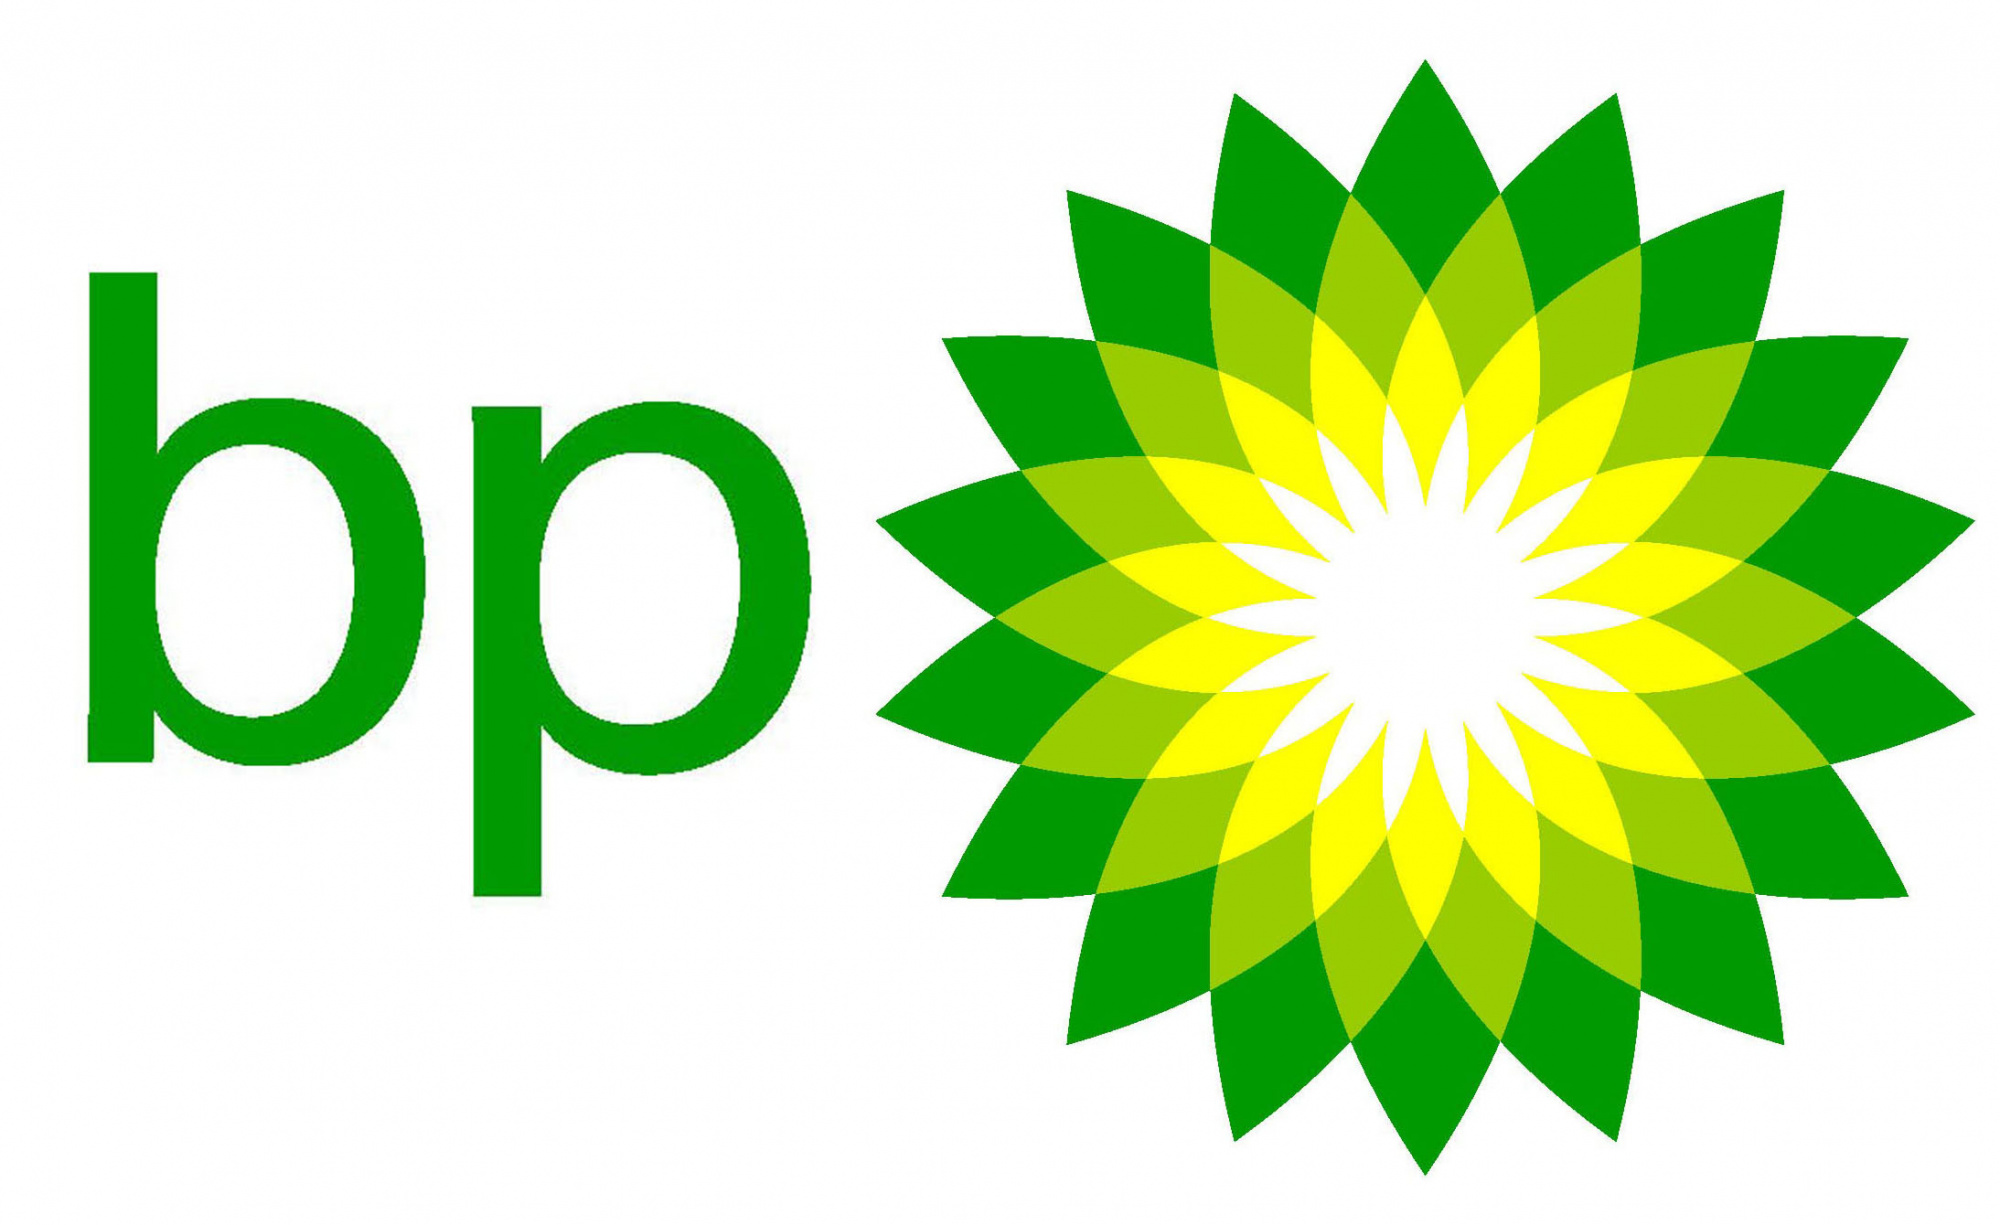 BP's logo